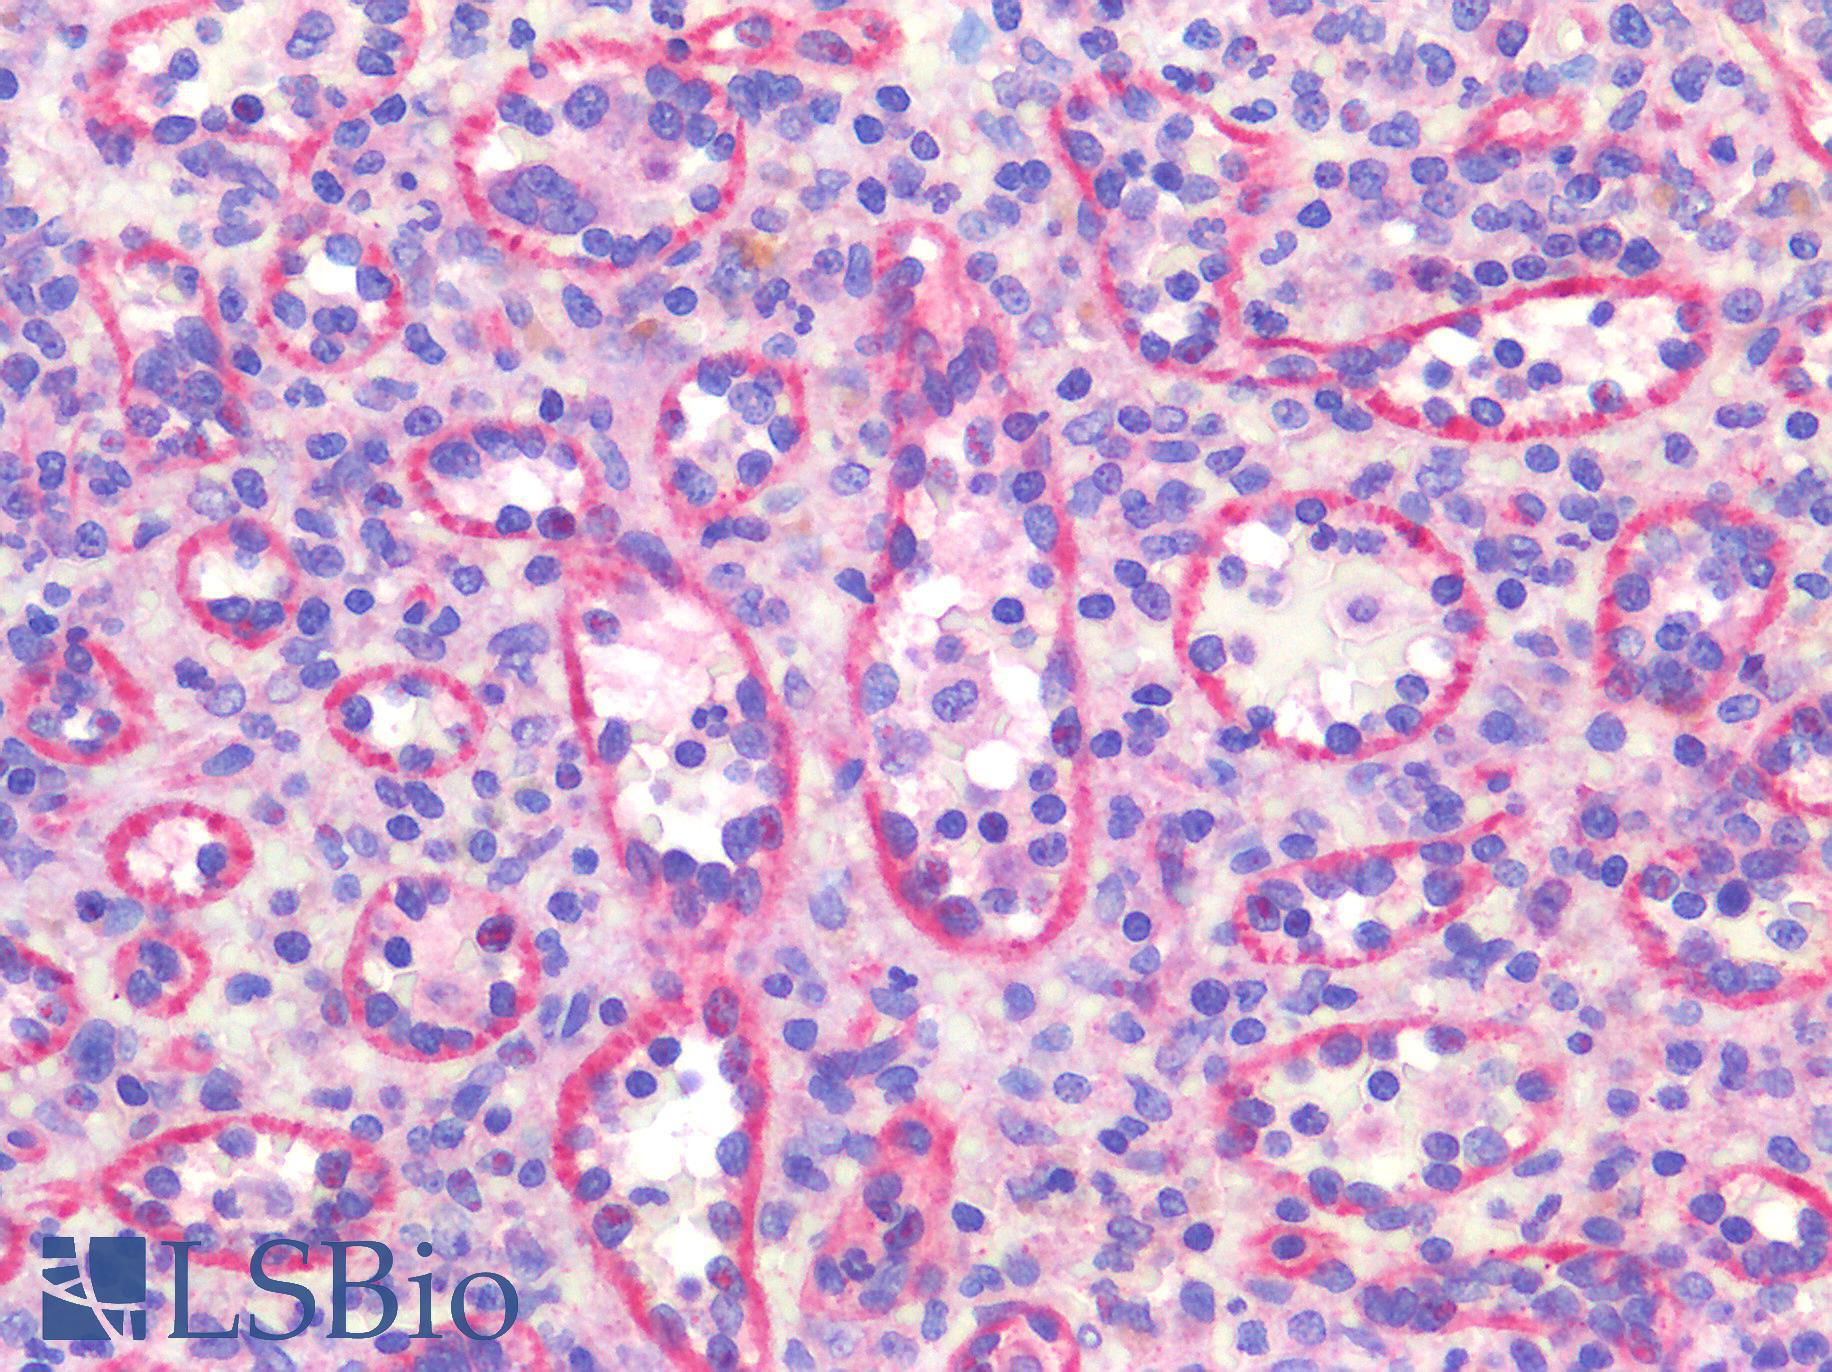 ST14 / Matriptase Antibody - Human Spleen, Membranous Staining: Formalin-Fixed, Paraffin-Embedded (FFPE)